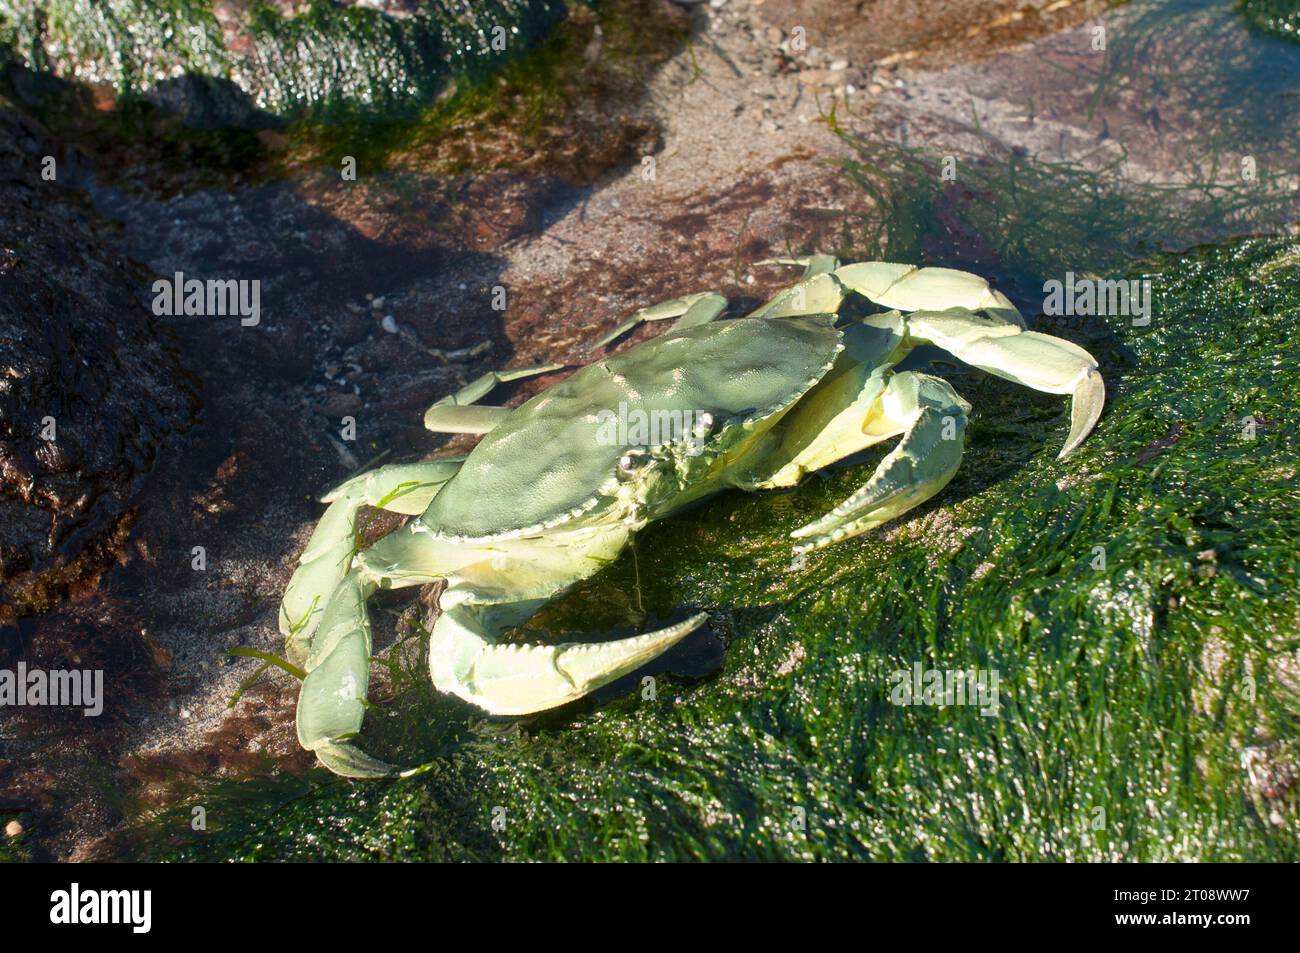 Réplica de plástico cangrejo verde en un entorno natural - John Gollop Foto de stock